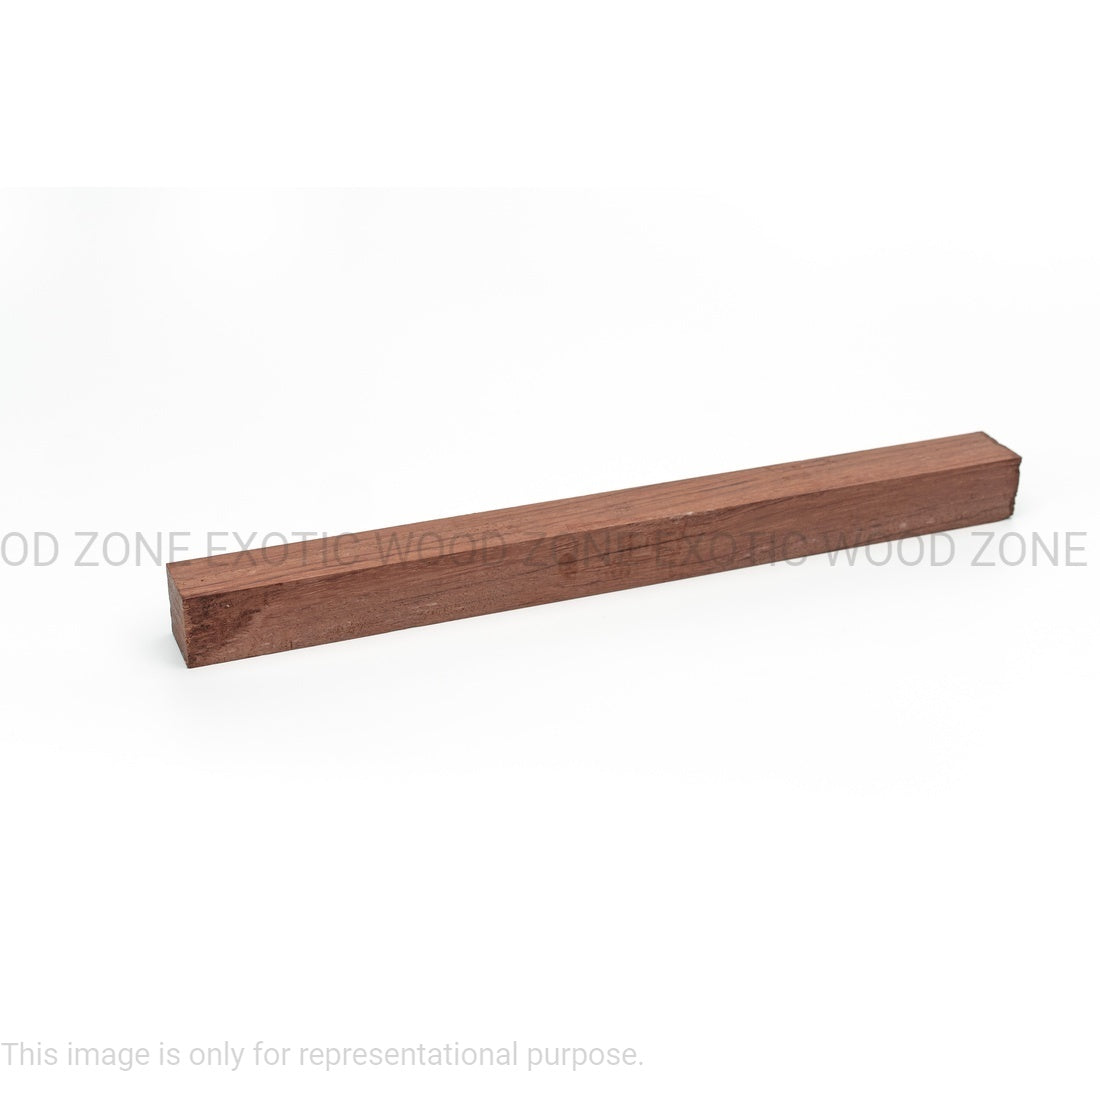 Pack Of 8 Bubinga Hardwood Turning Square Wood Blanks 1 x 1 x 12 inches - Exotic Wood Zone - Buy online Across USA 